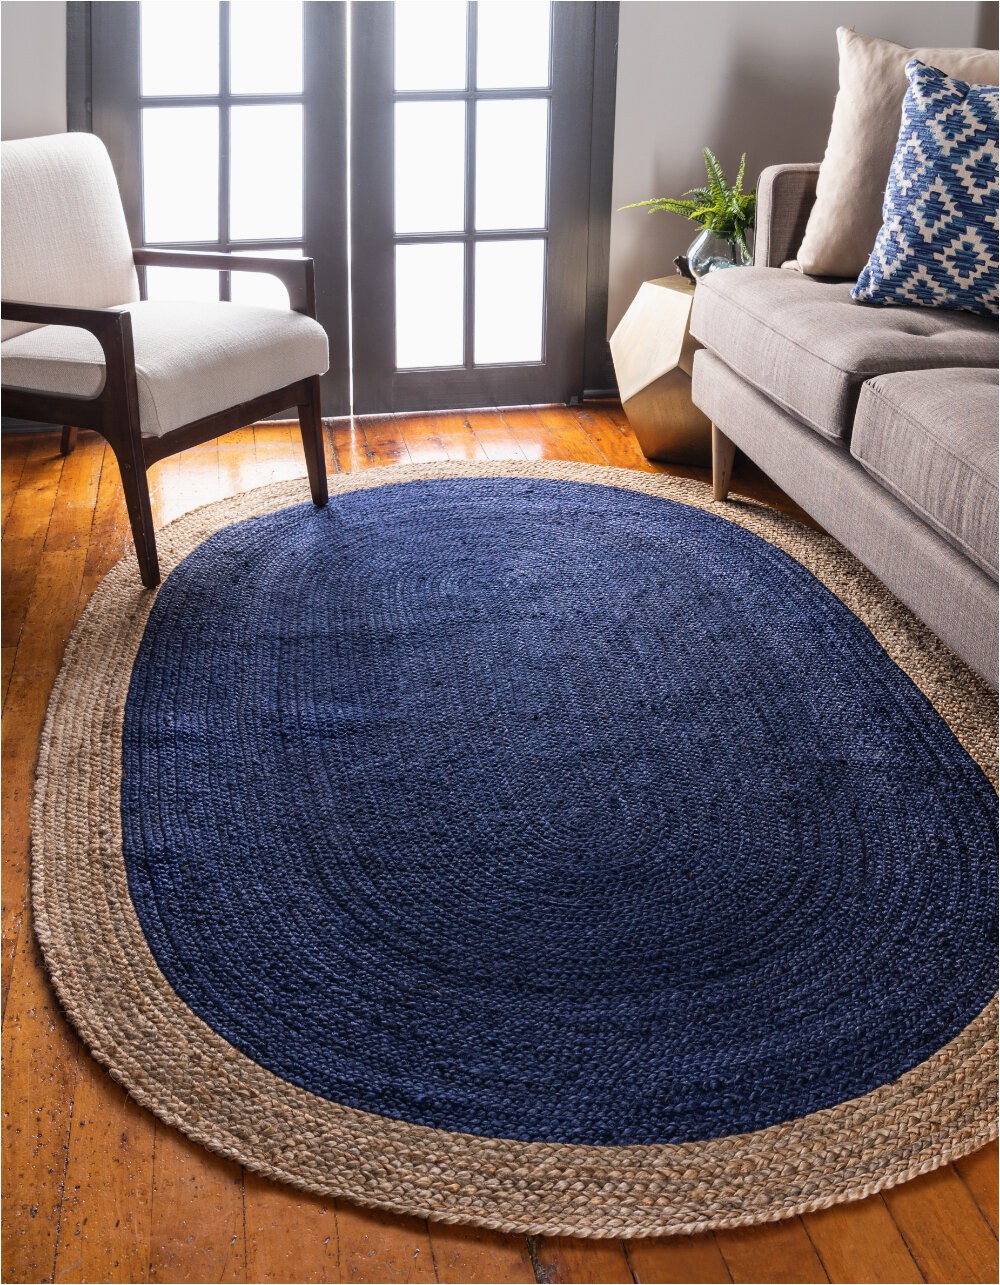 everhart handmade braided jutesisal navy bluebeige area rug bchh6866 piid=